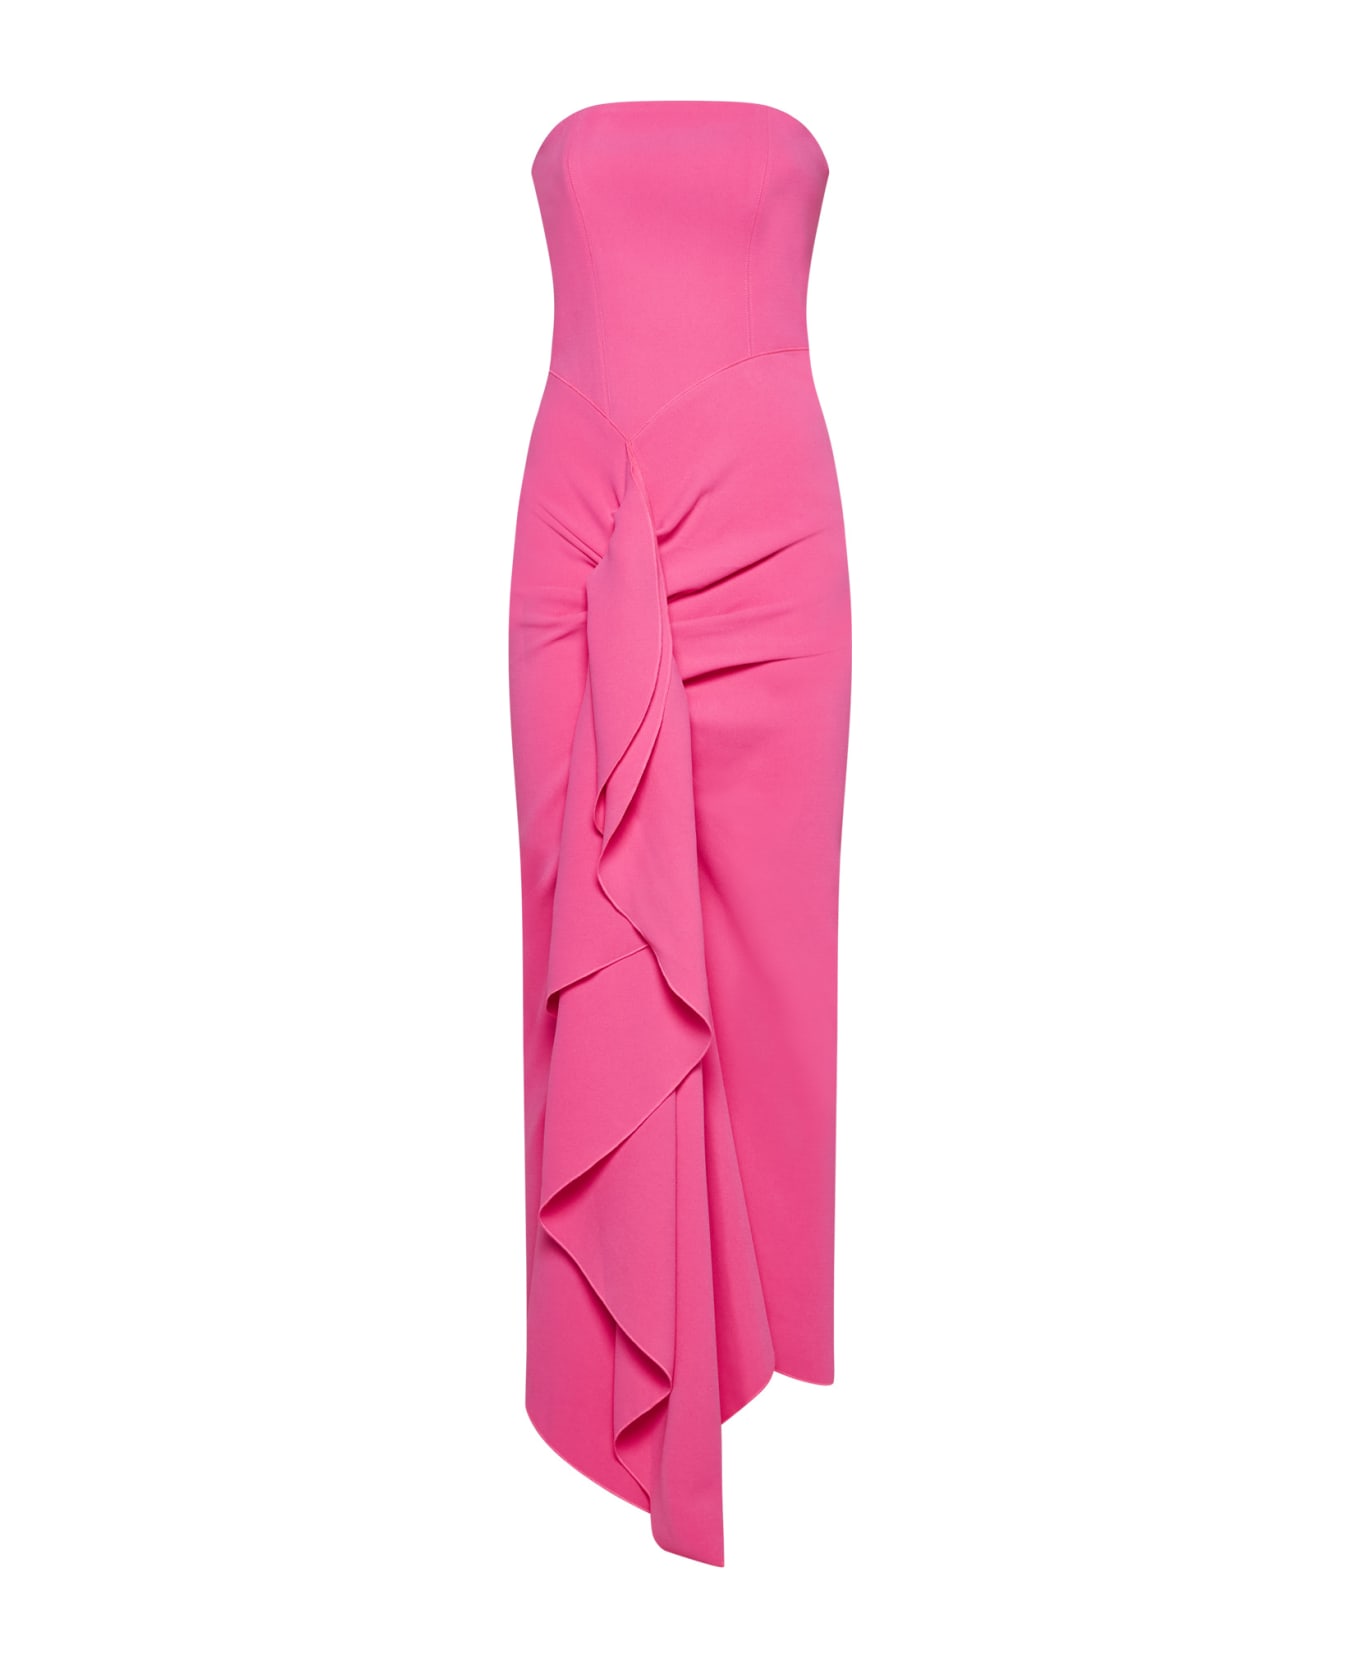 Solace London Dress - Ultra pink